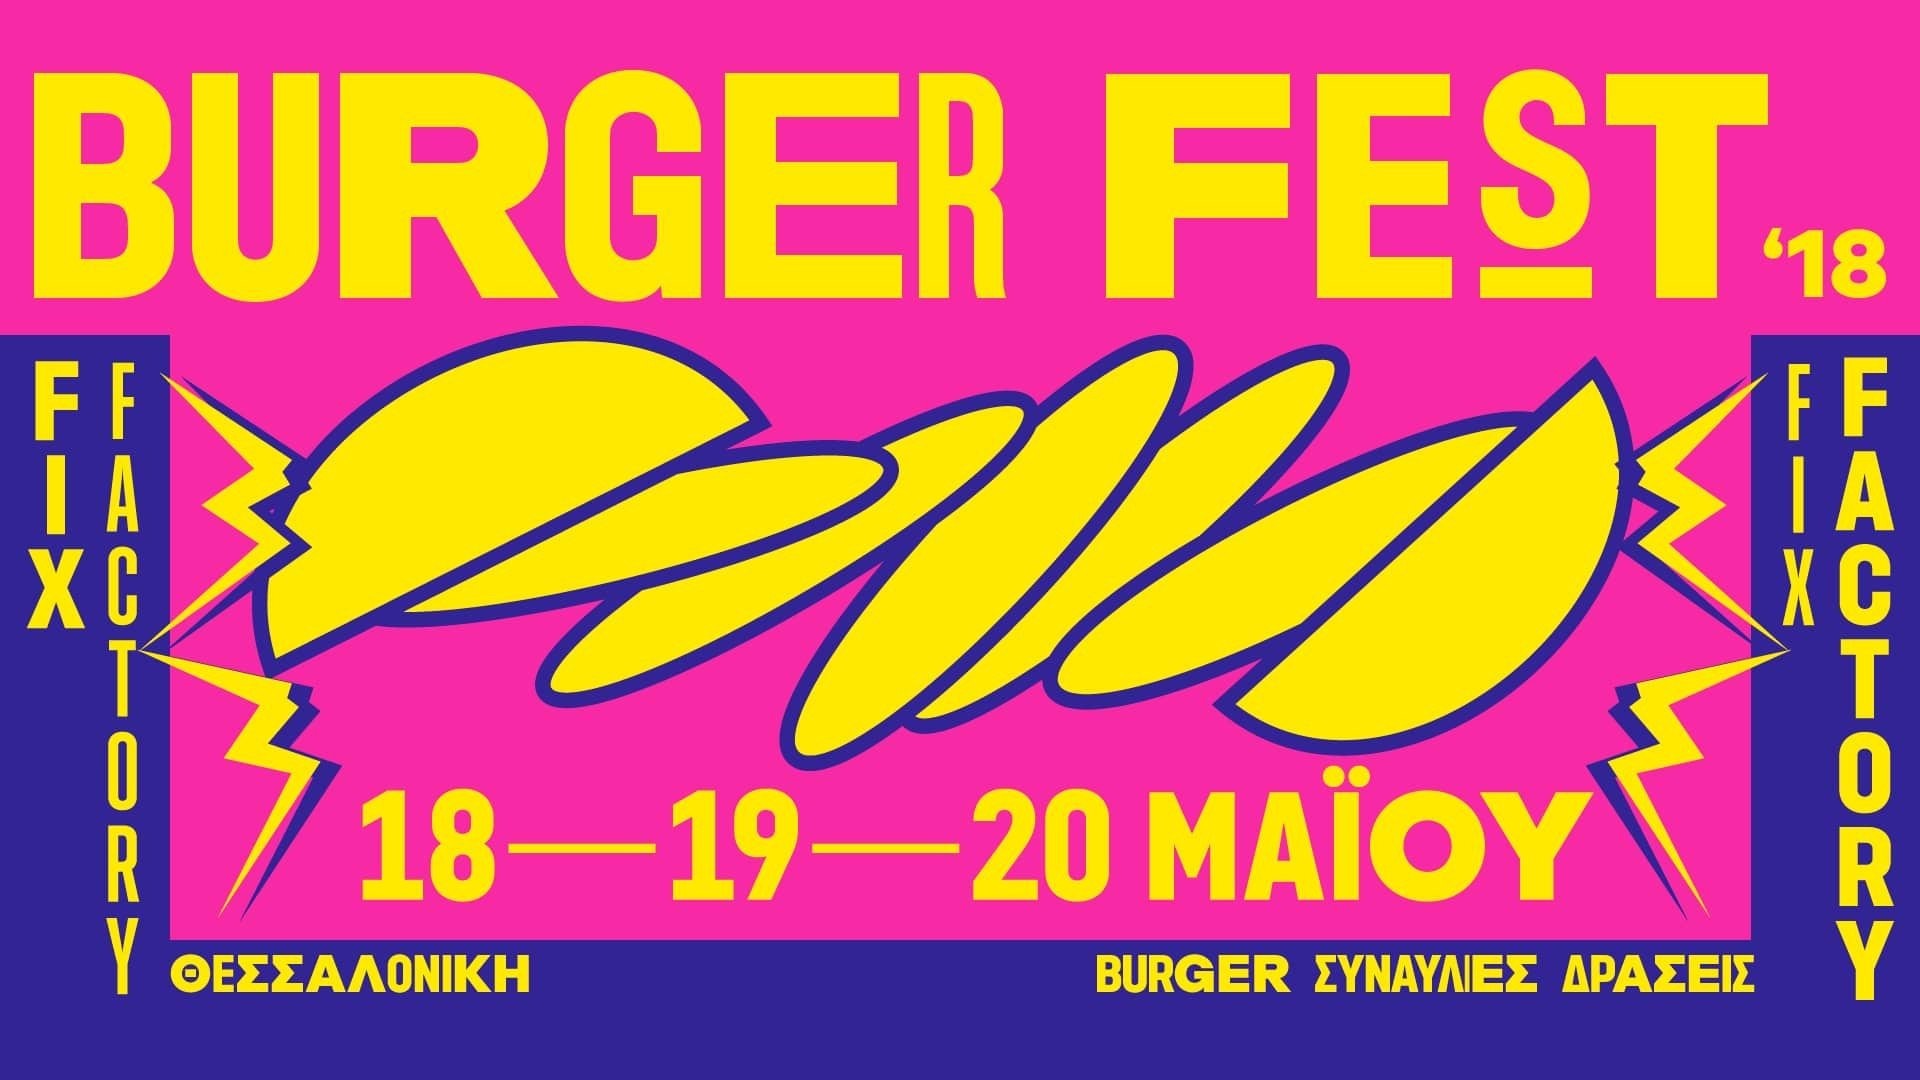 burger-fest-facebook-event-page-cover.jpg